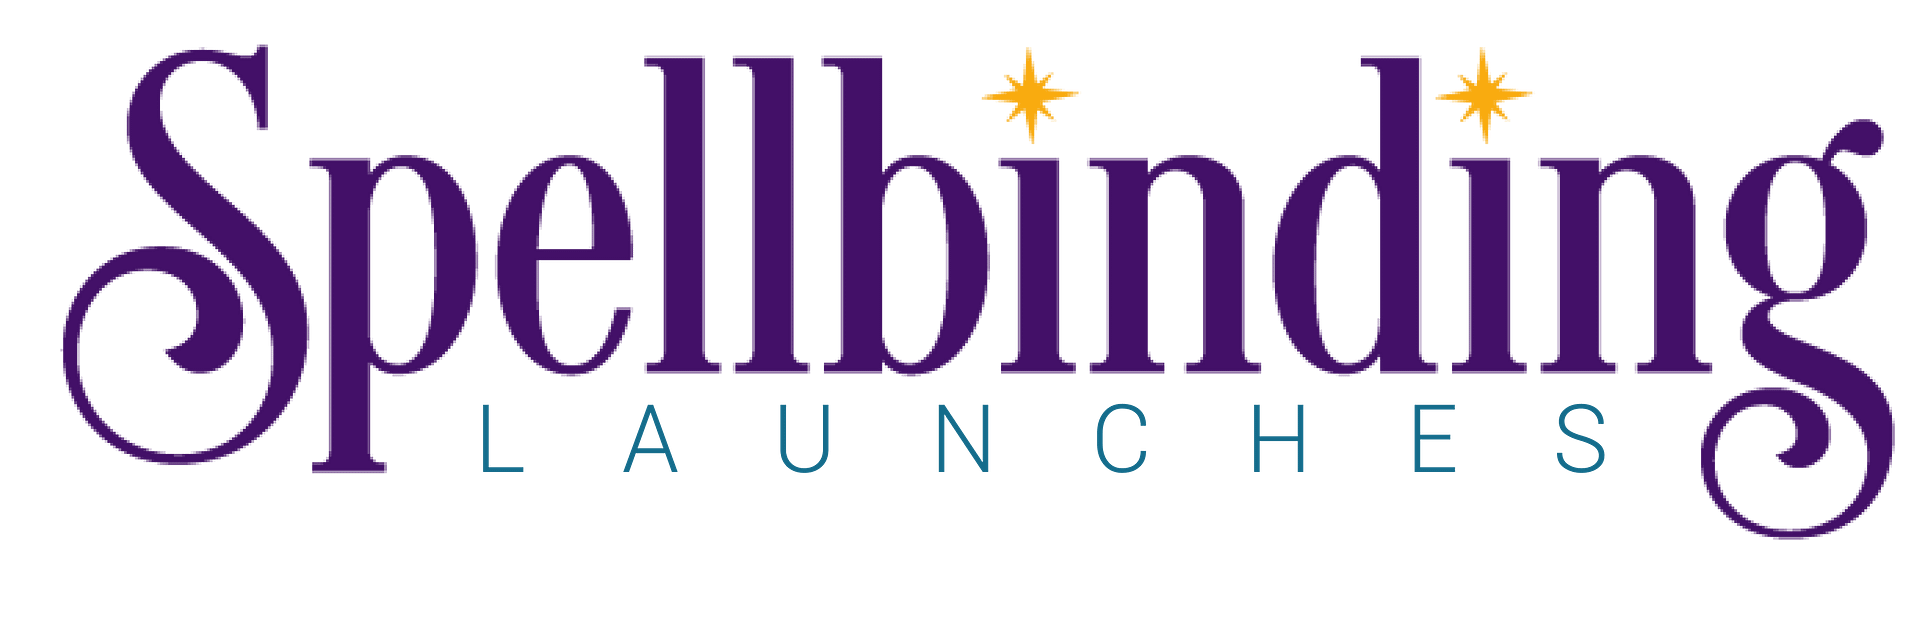 Spellbinding Launches Logo